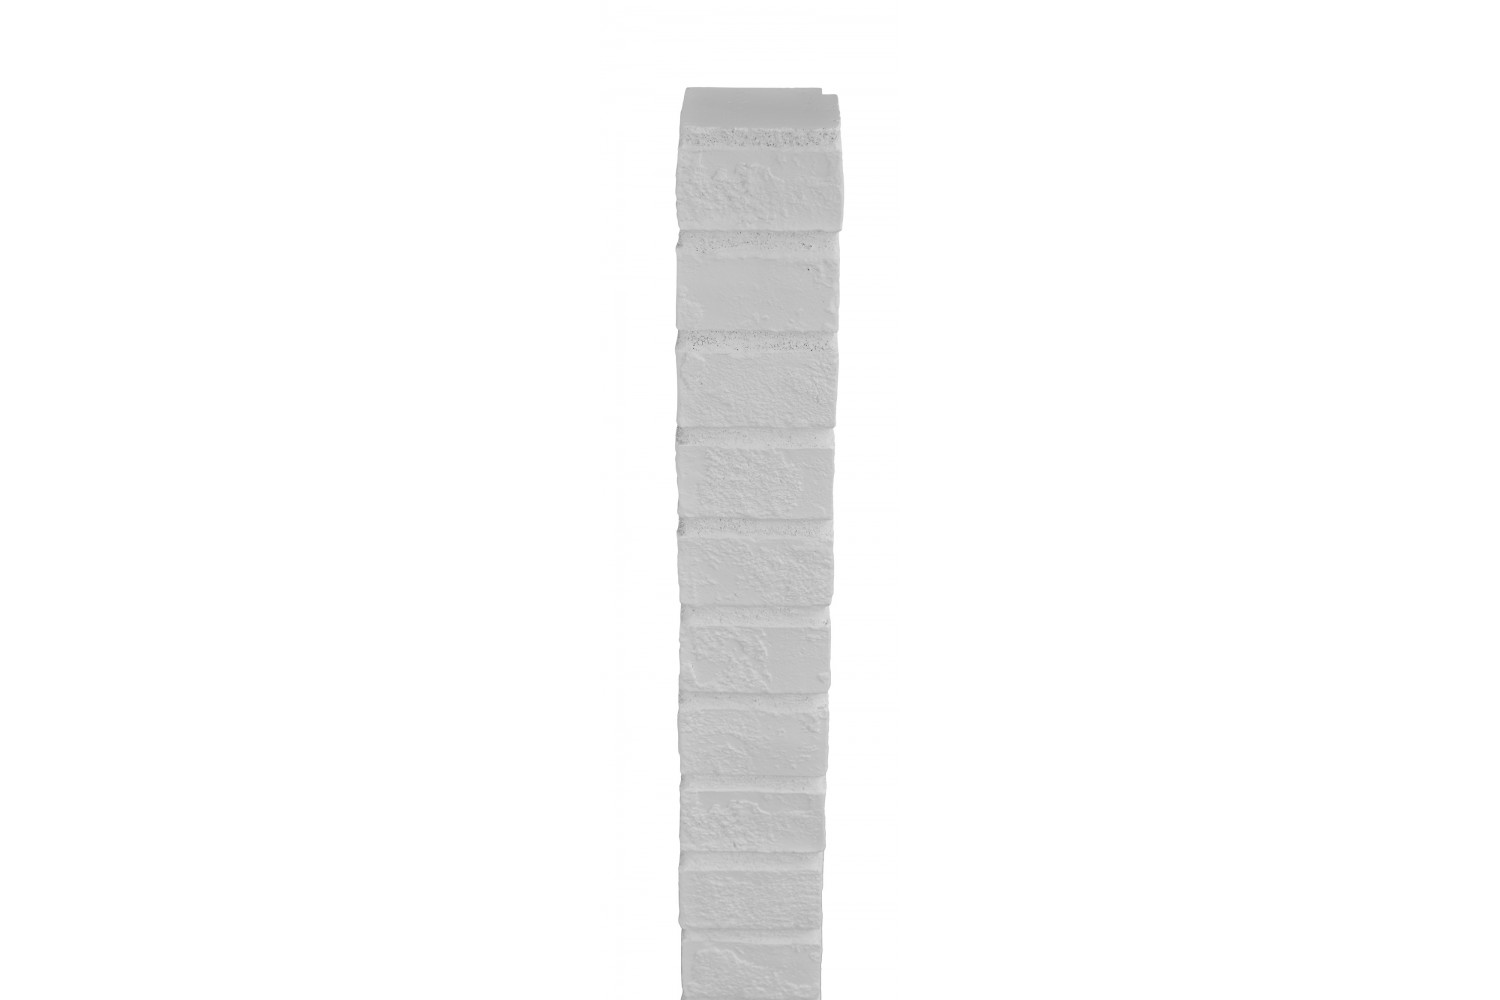 Rustic Brick Ledger - White